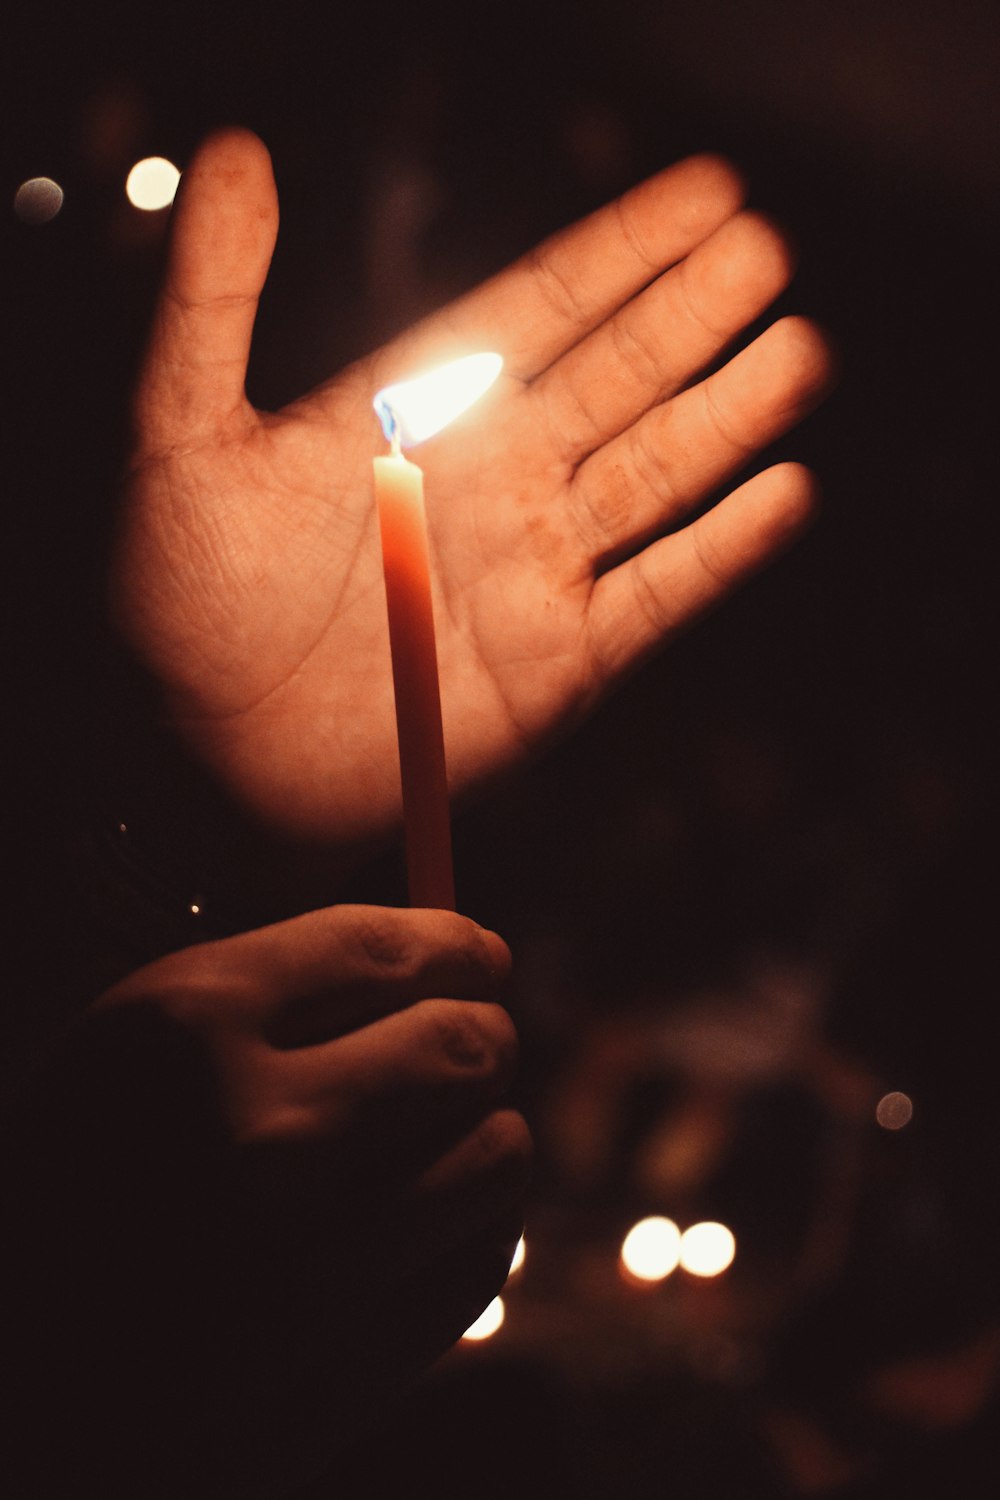 Persona sosteniendo una vela encendida cerca de la palma